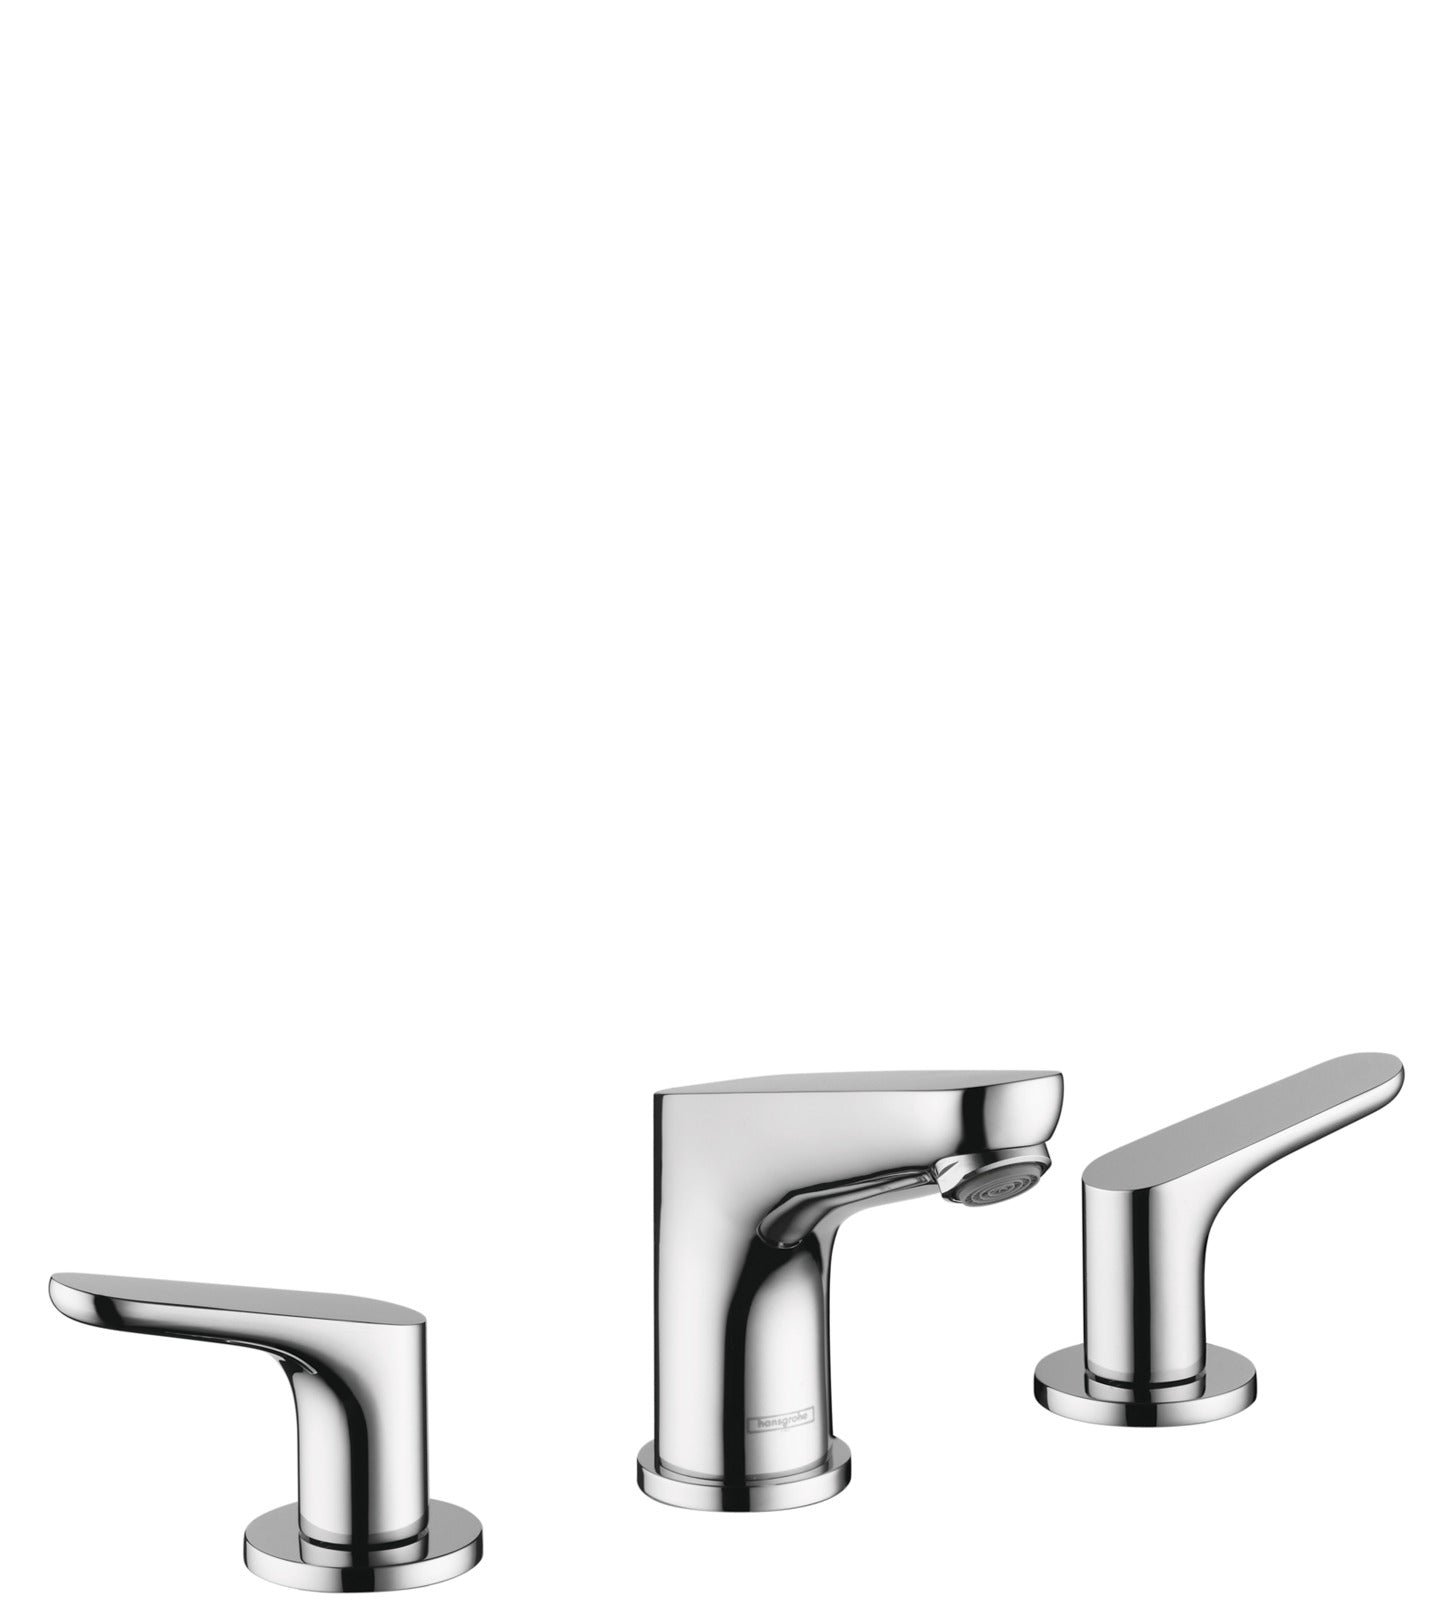 HANSGROHE 04369000 Chrome Focus Modern Widespread Bathroom Faucet 1.2 GPM